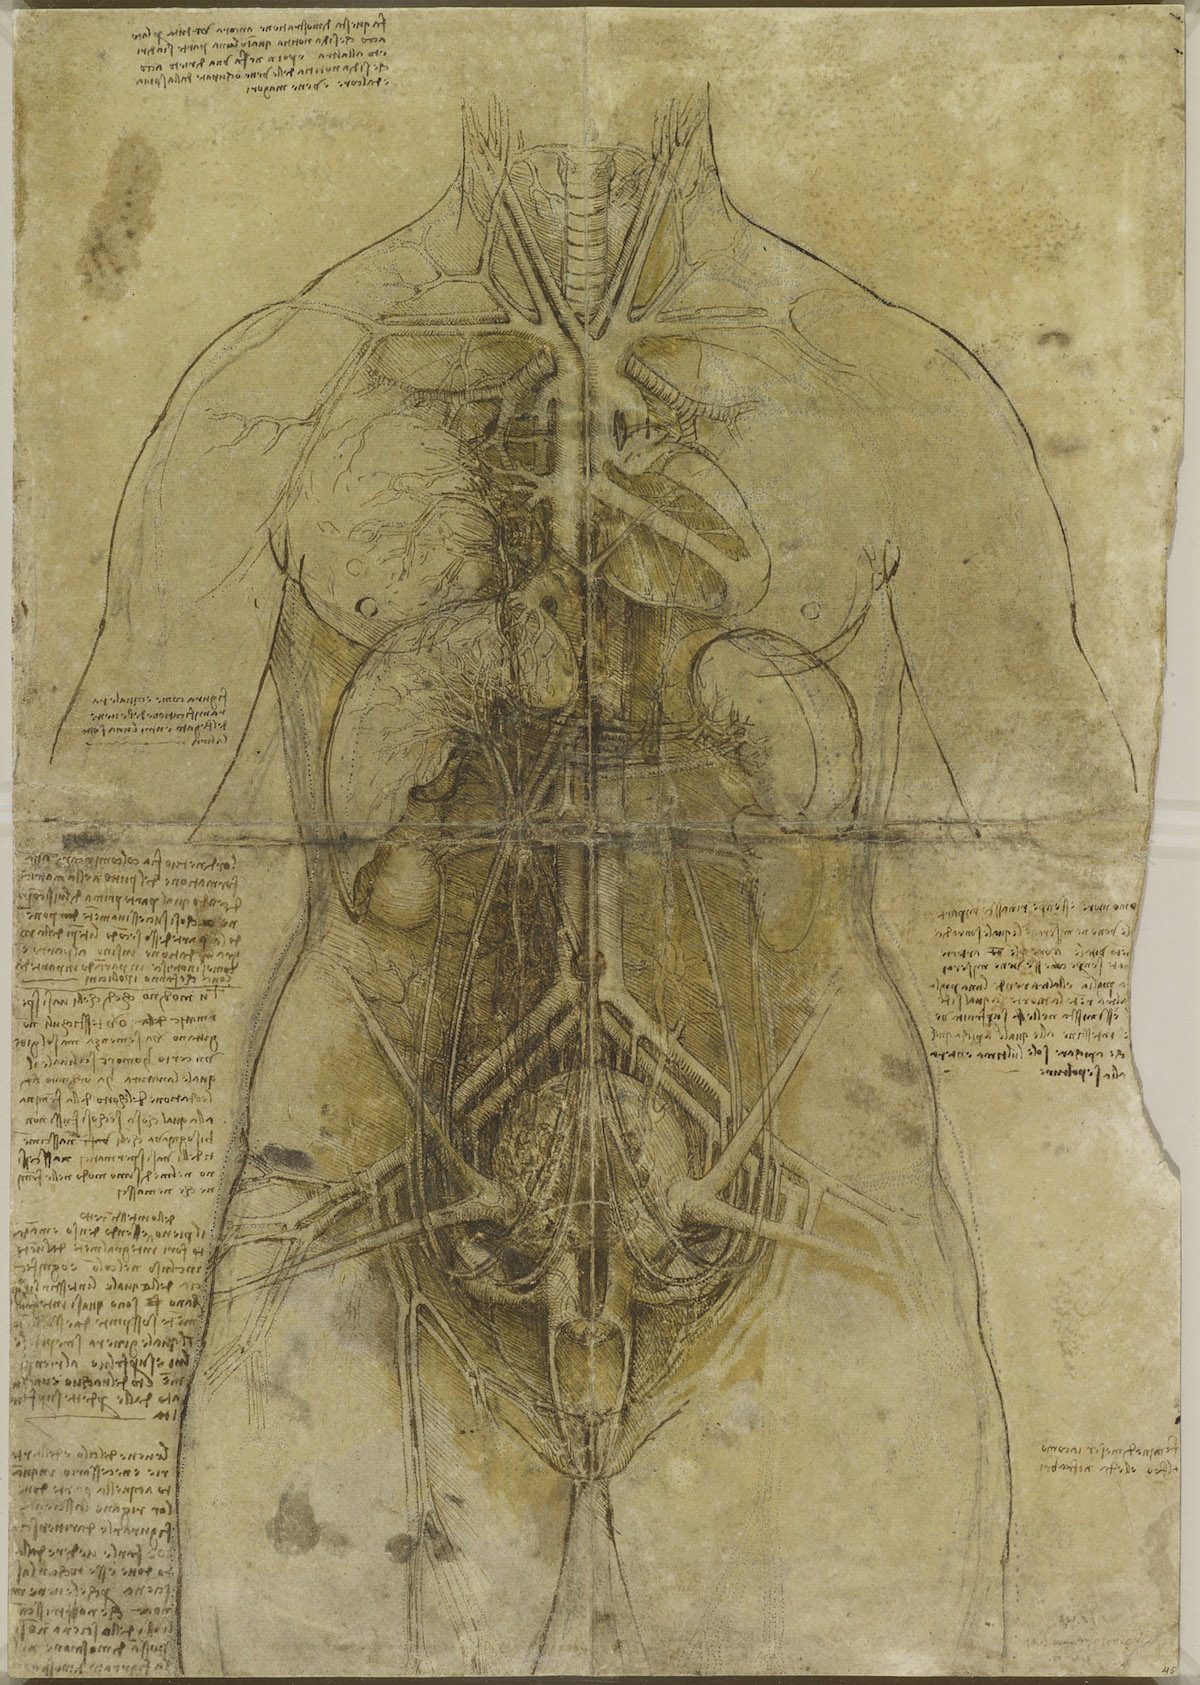  Vinci anatomy